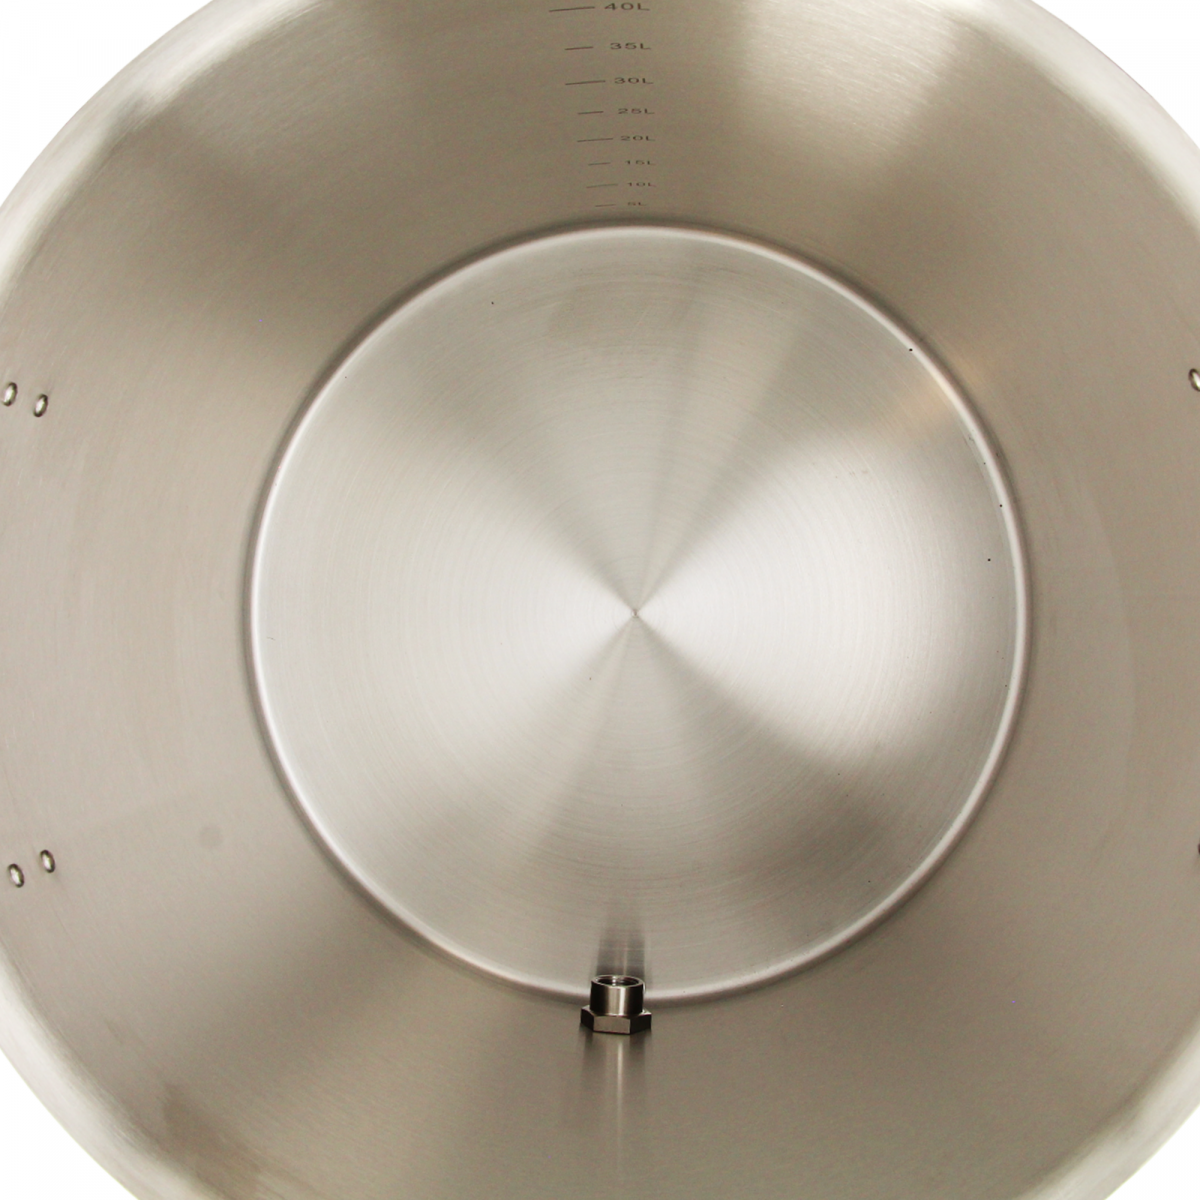 Brewferm homebrew kettle SST 50 l with ball valve (40 x 40 cm)